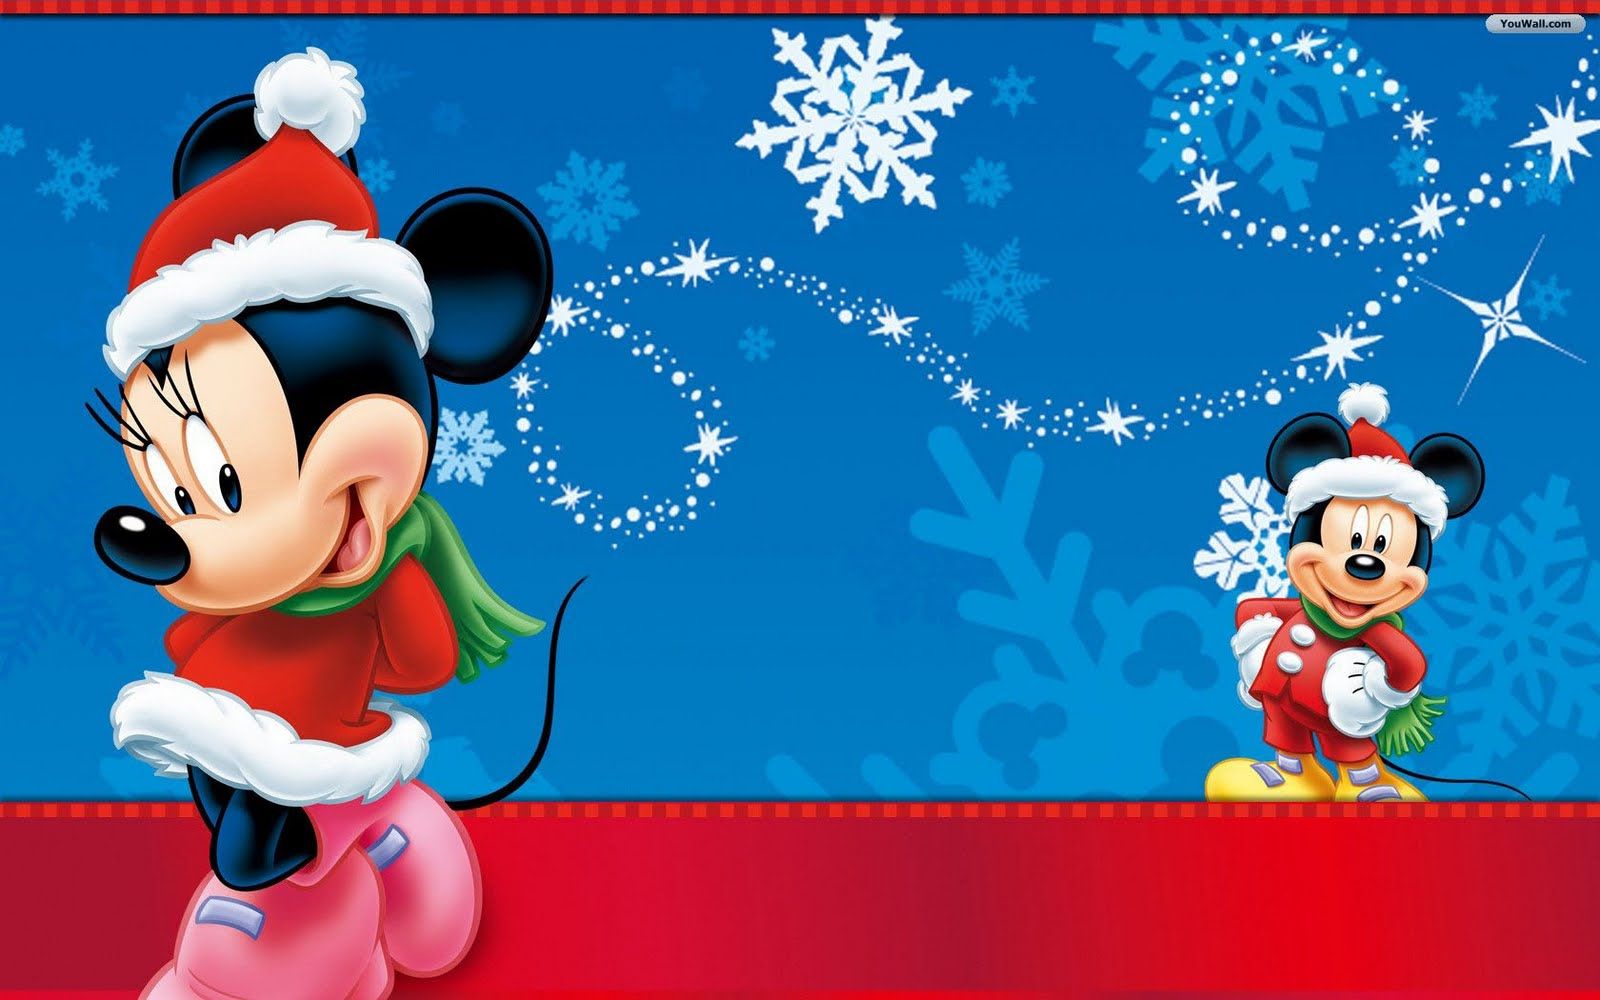 Disney Christmas Wallpaper. Disney Christmas Wallpaper. Fondos navidad, Minnie navideña, Álbum de recortes de disney